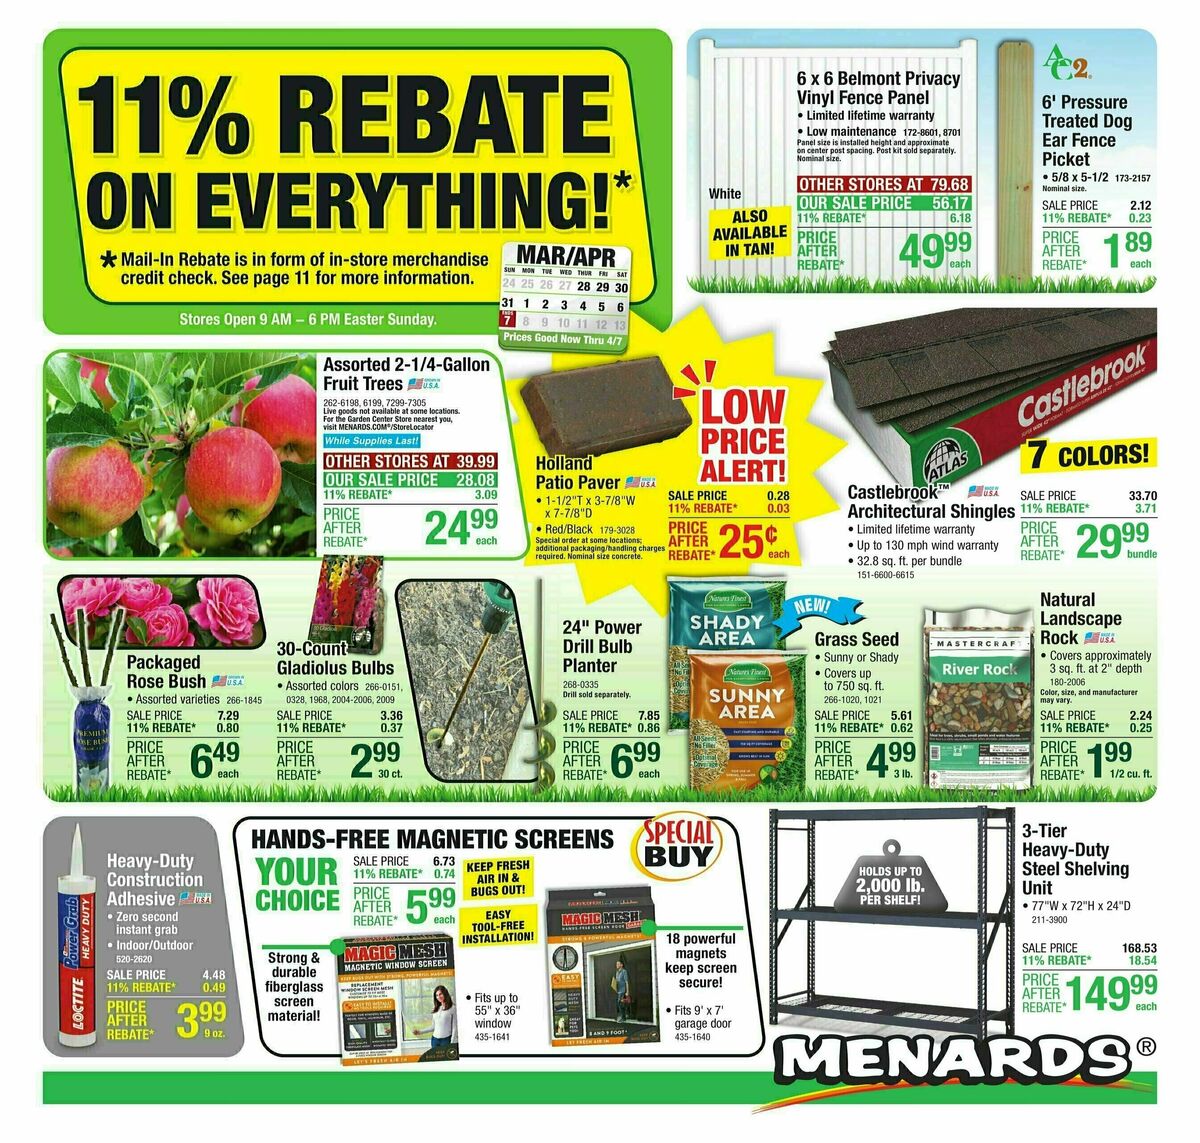 Menards 11% Rebate Sale Weekly Ad from March 27